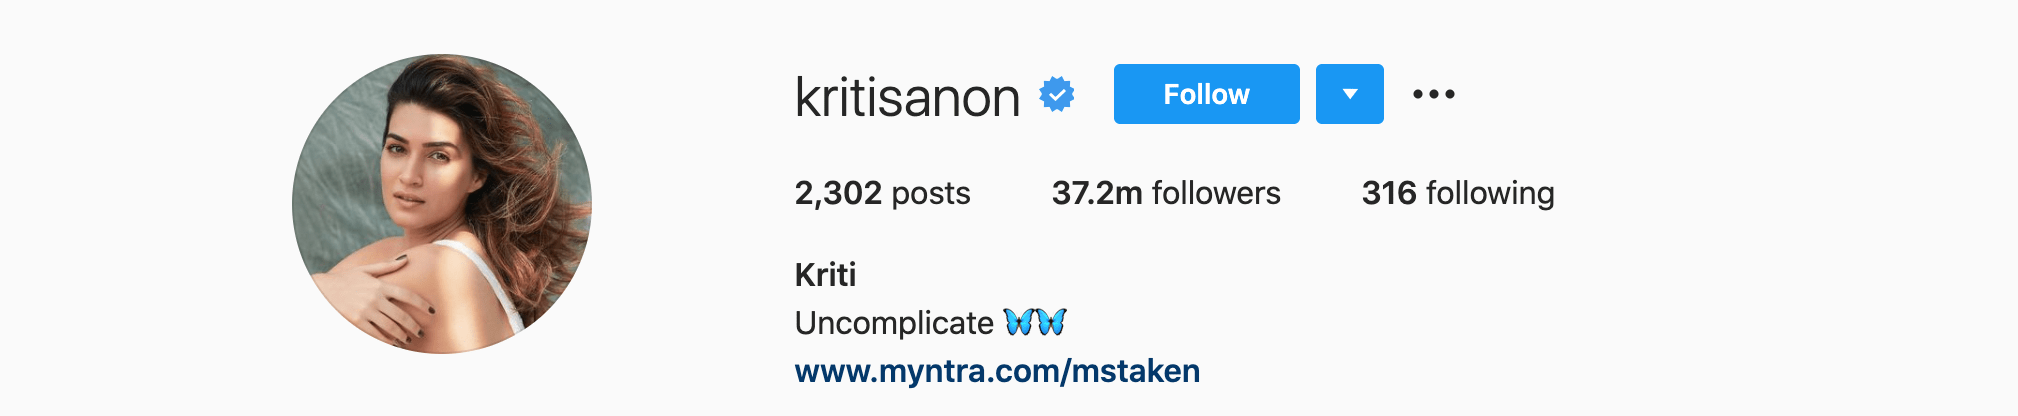 Top Instagram Influencers - KRITI SANON